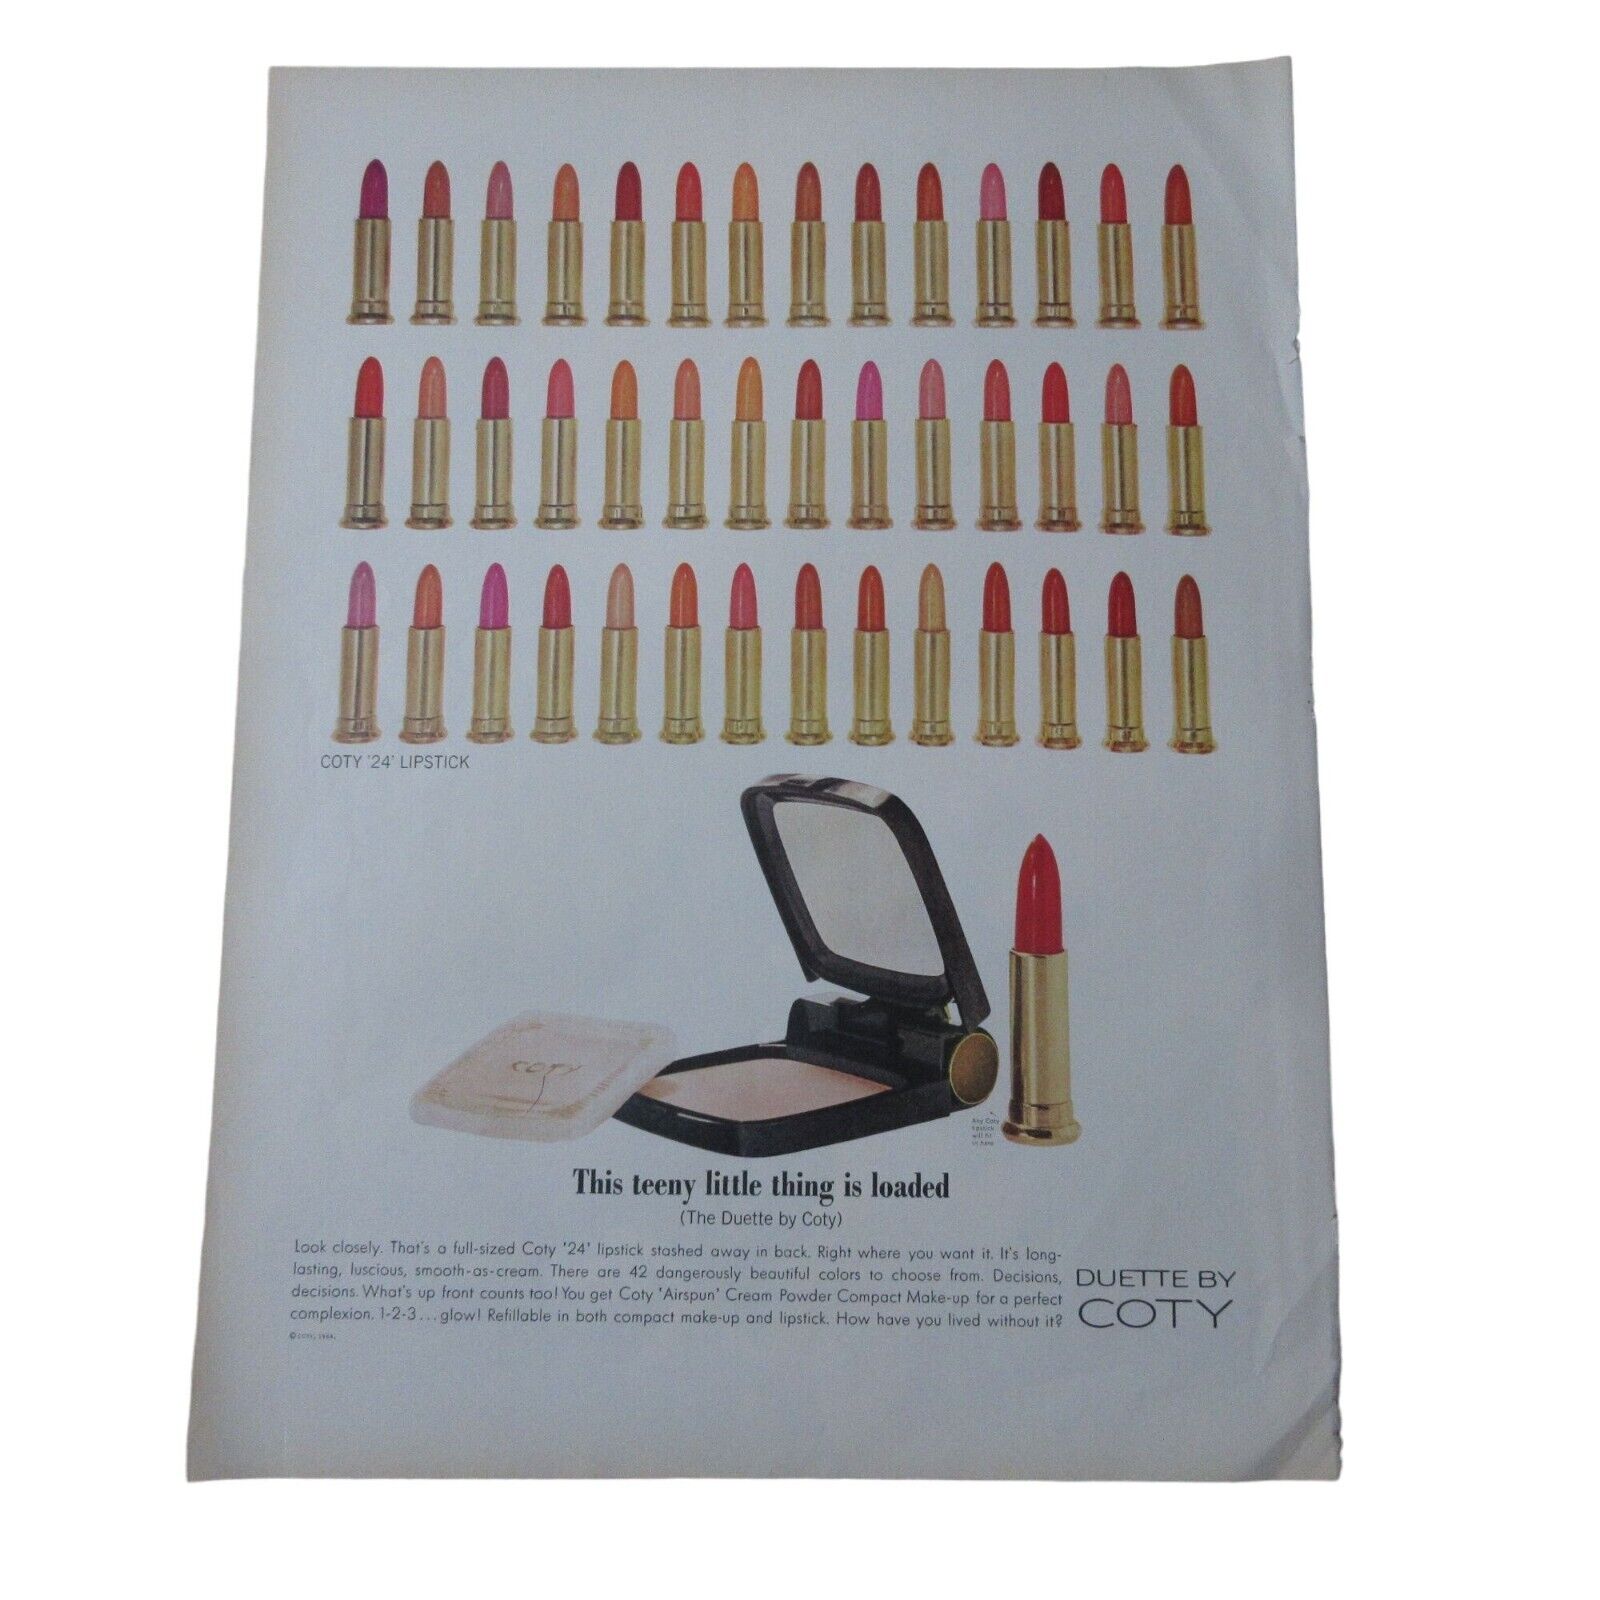 1964 Coty Duette Lipstick - Vintage Print Ad